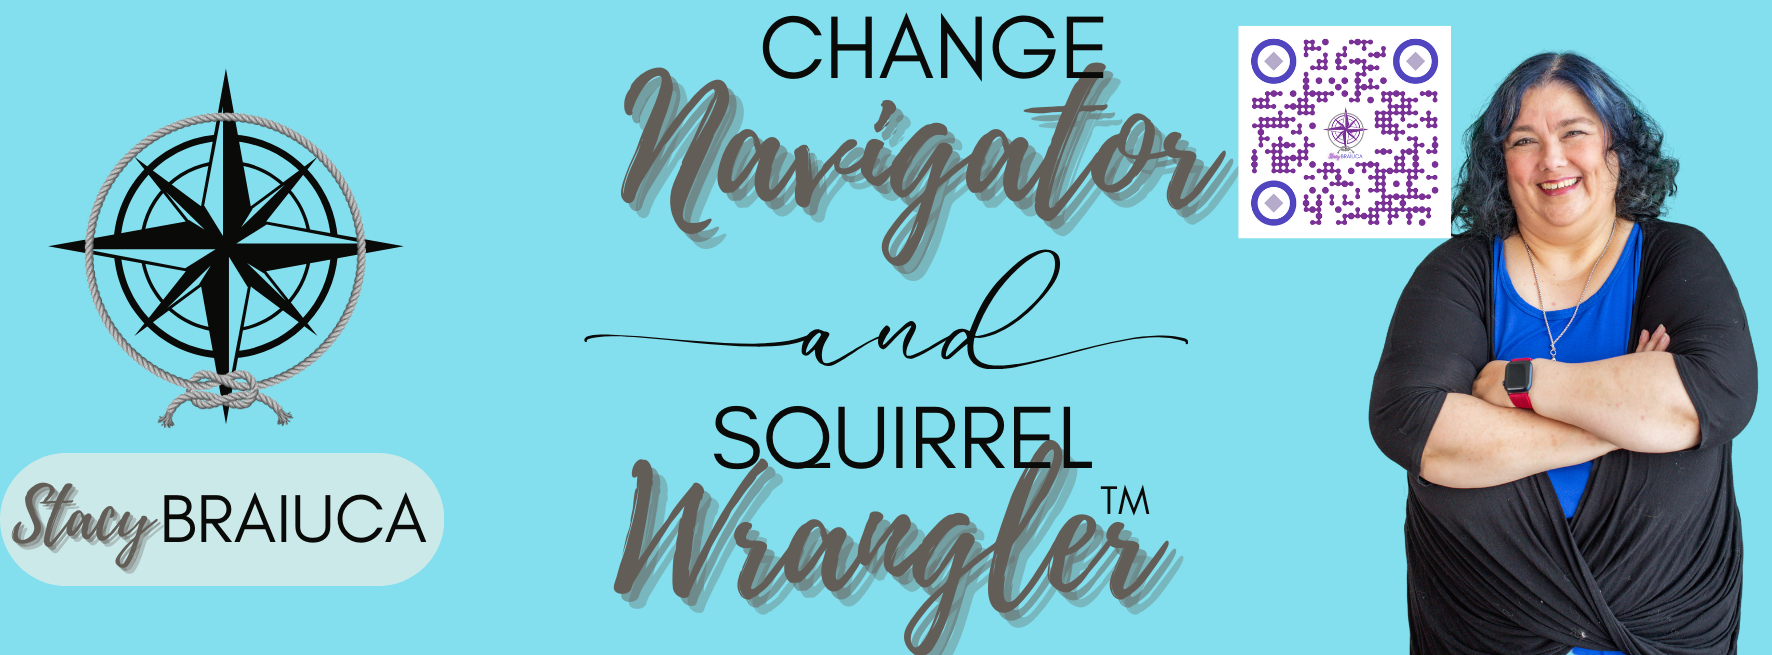 Stacy Braiuca 🧭 Change Navigator™ & 🐿 Squirrel Wrangler™